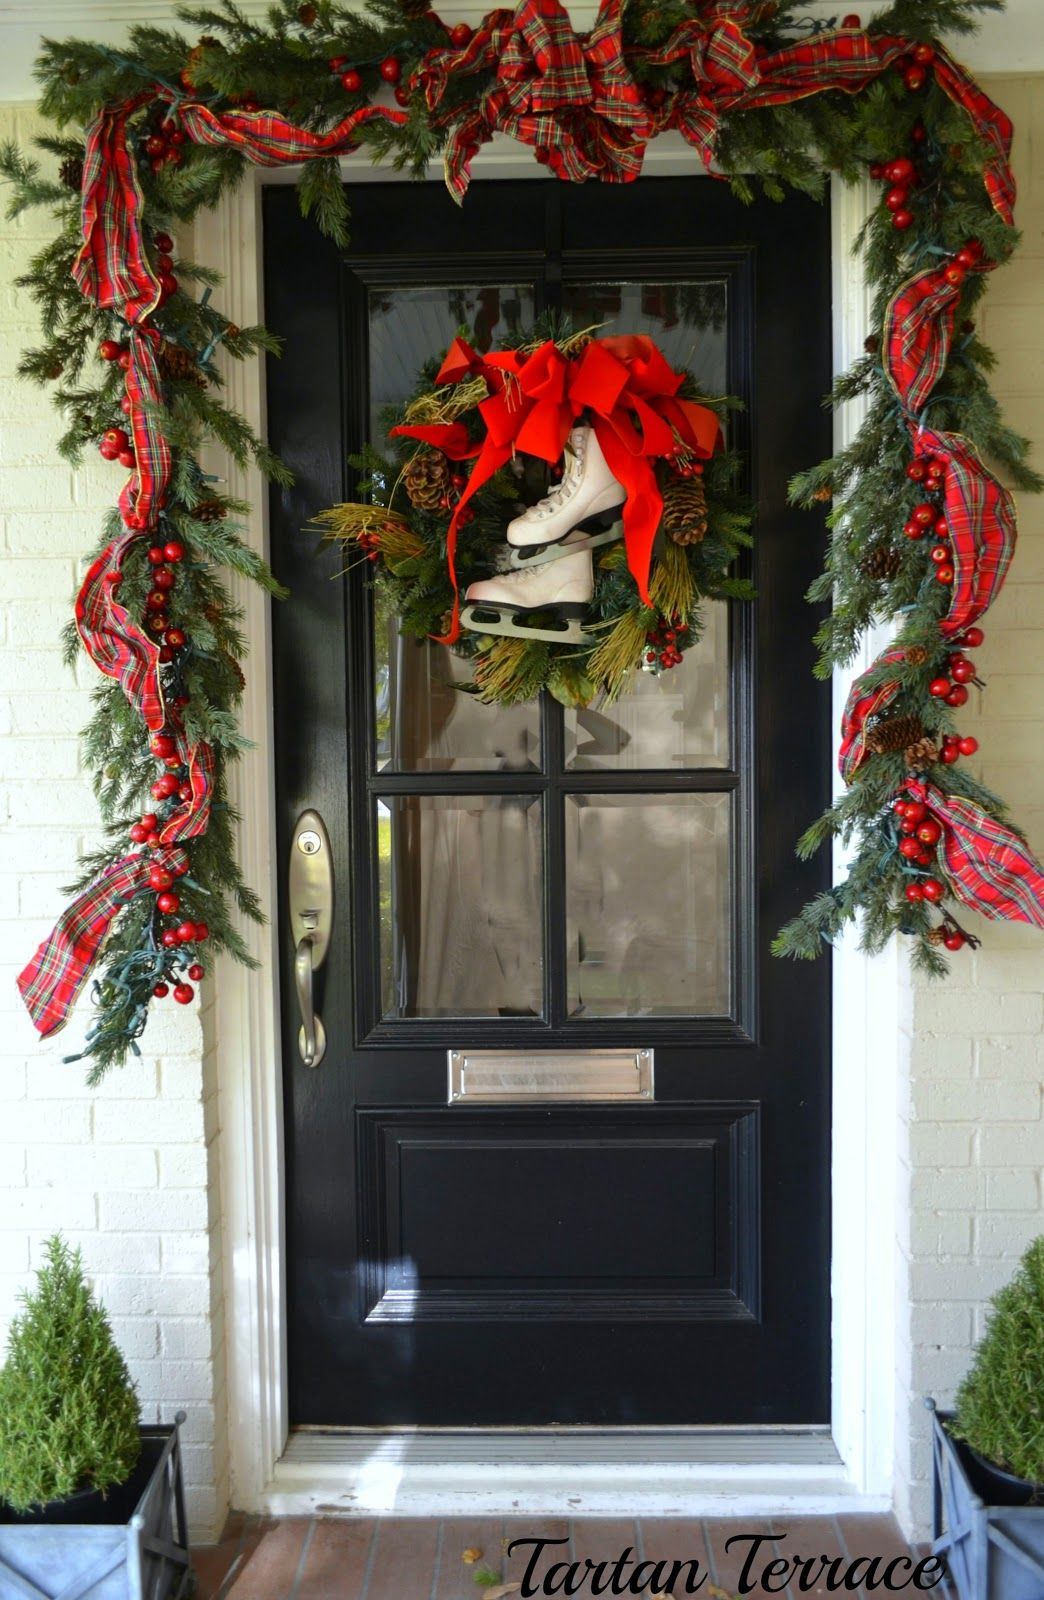 TartanTerrace: Christmas Door over at the Terrace